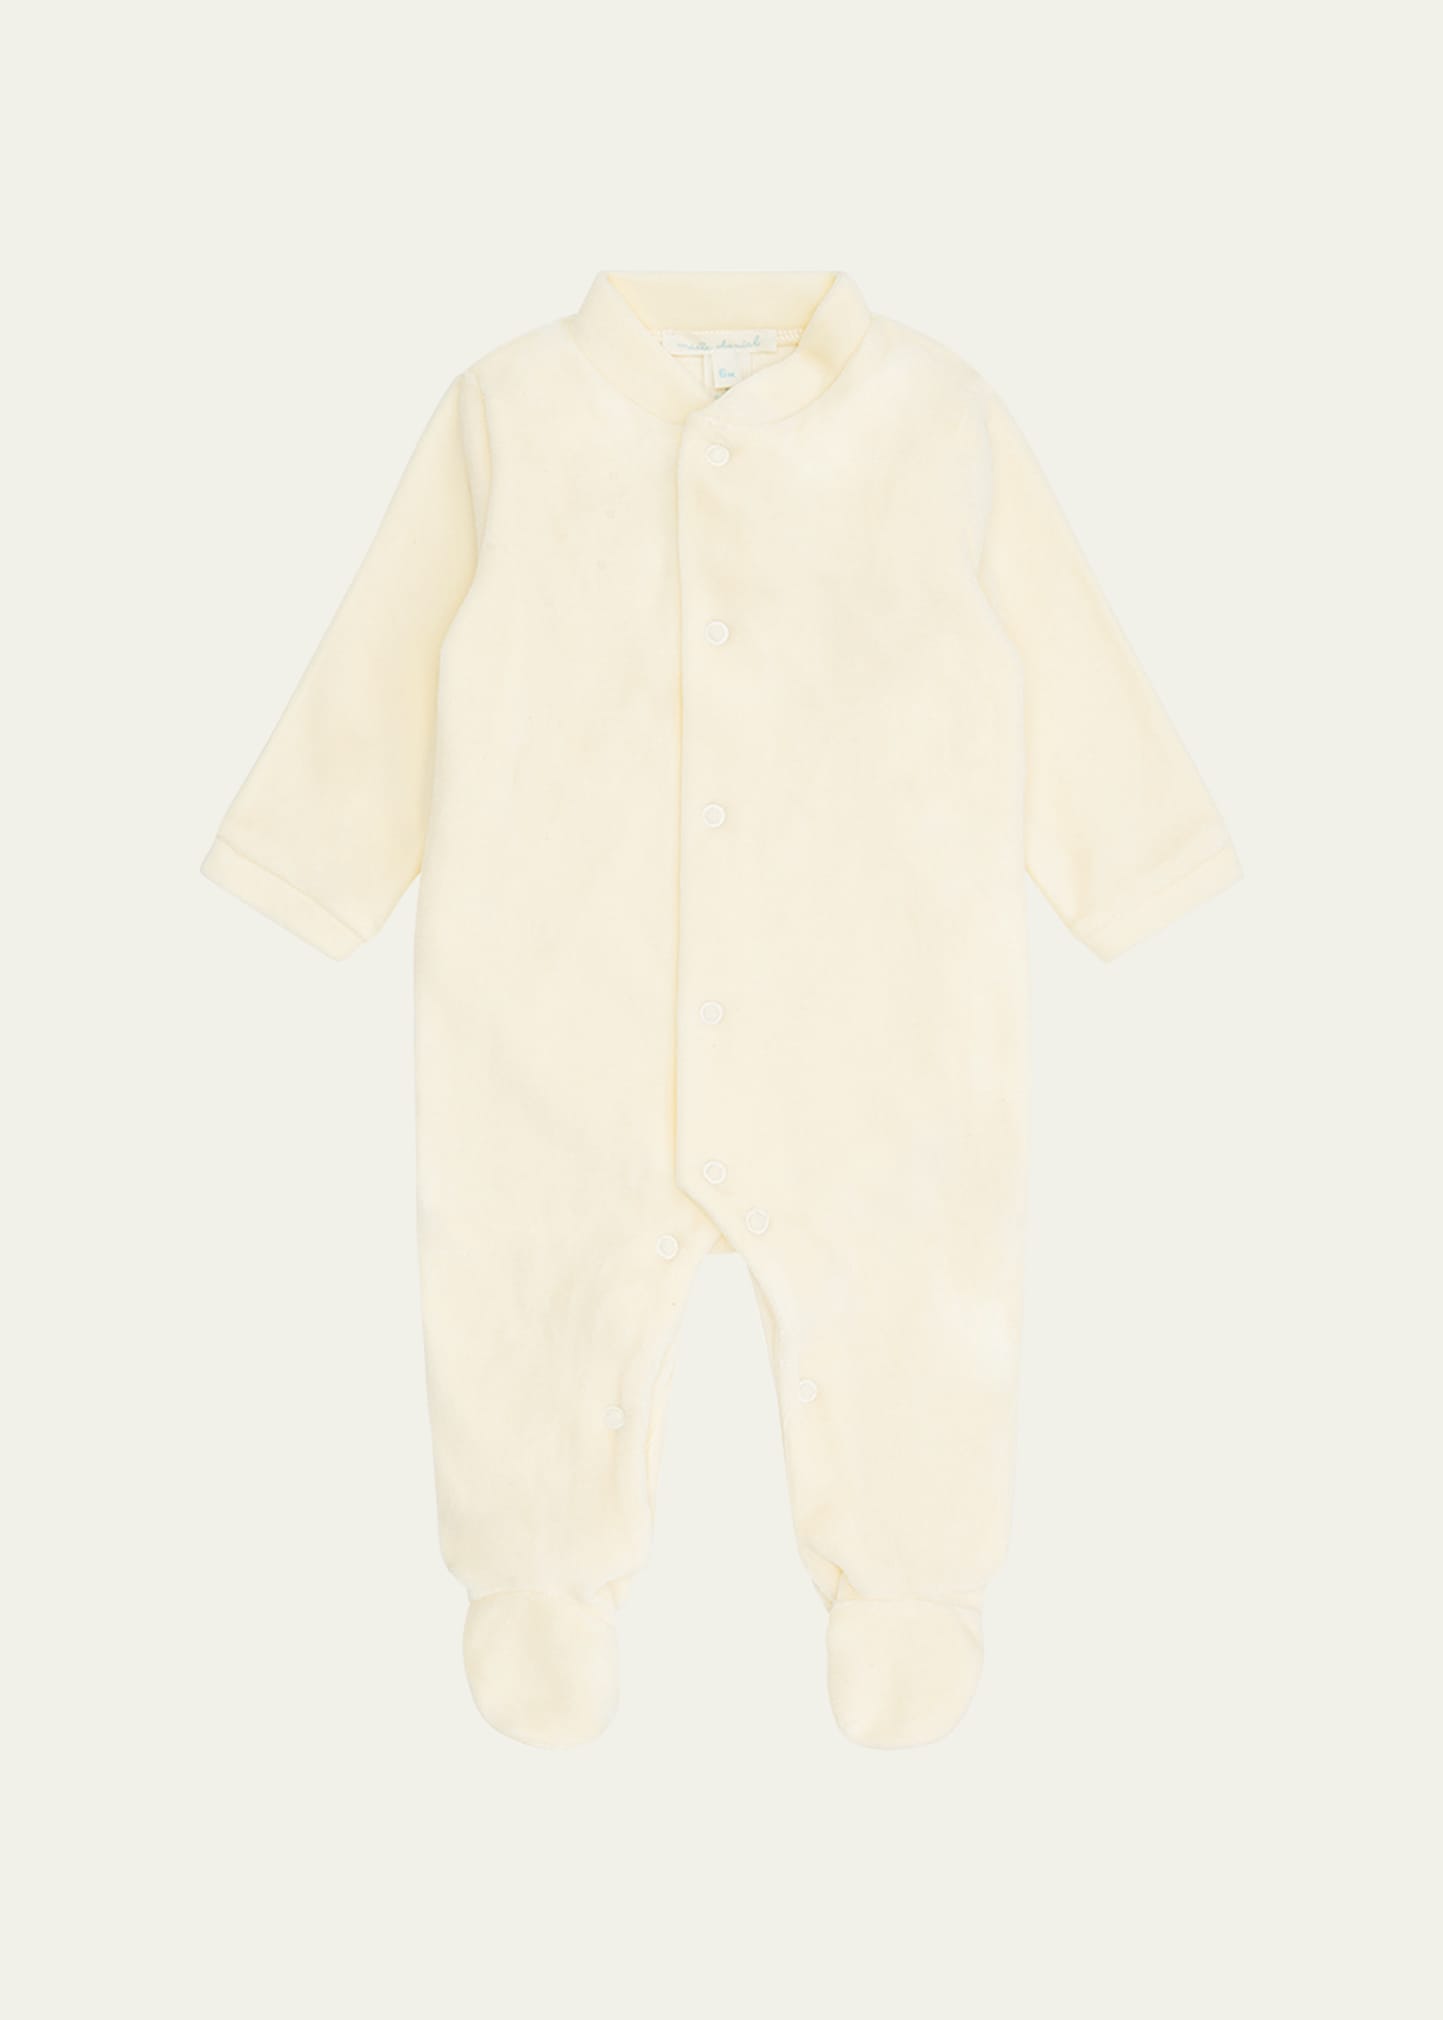 Marie Chantal Girl's Velour Golden Angel Wing Footie Pajamas, Size Newborn-18M